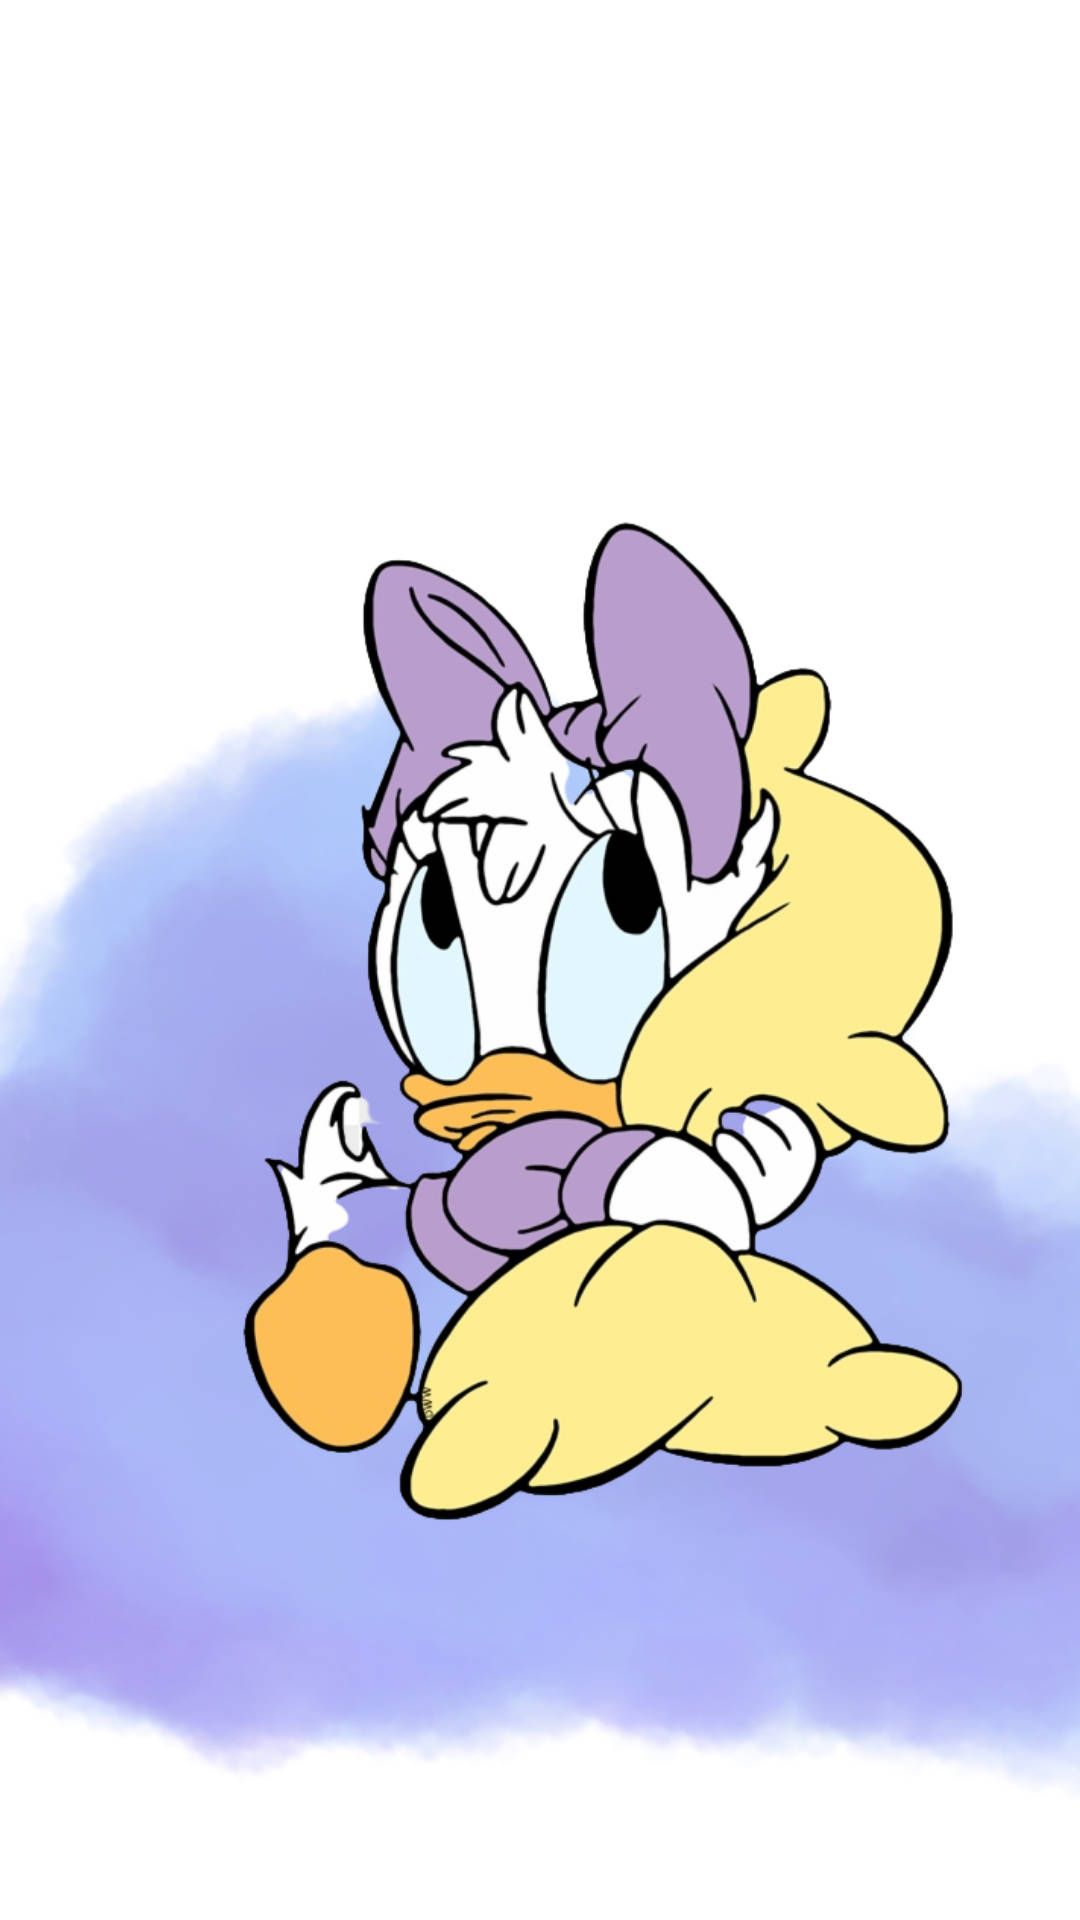 Download Adorable Daisy Duck In Purple Cloud Wallpaper